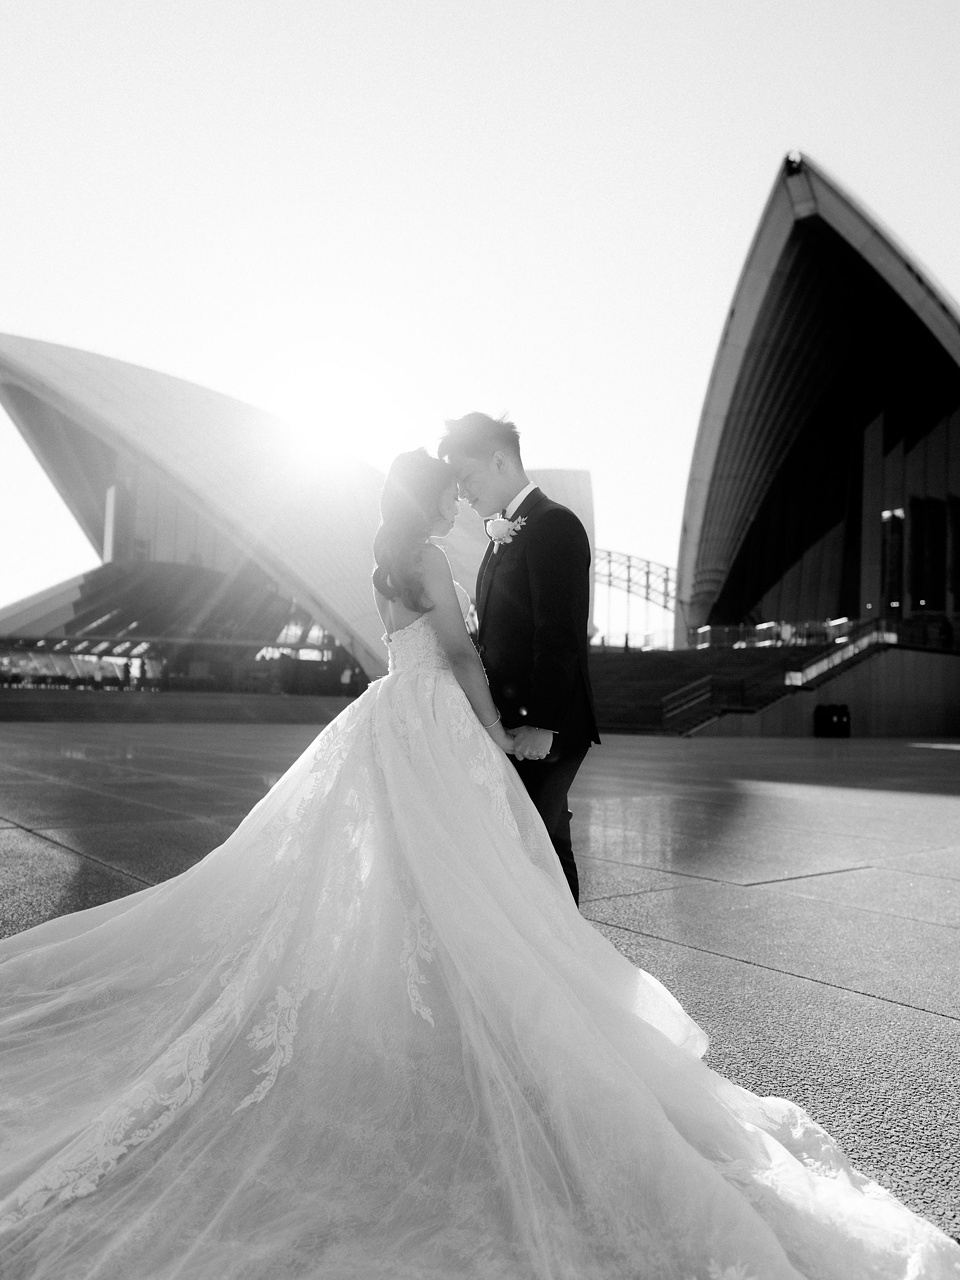 Erlyn & William’s Heartfelt and Elegant Wedding at View by Sydney